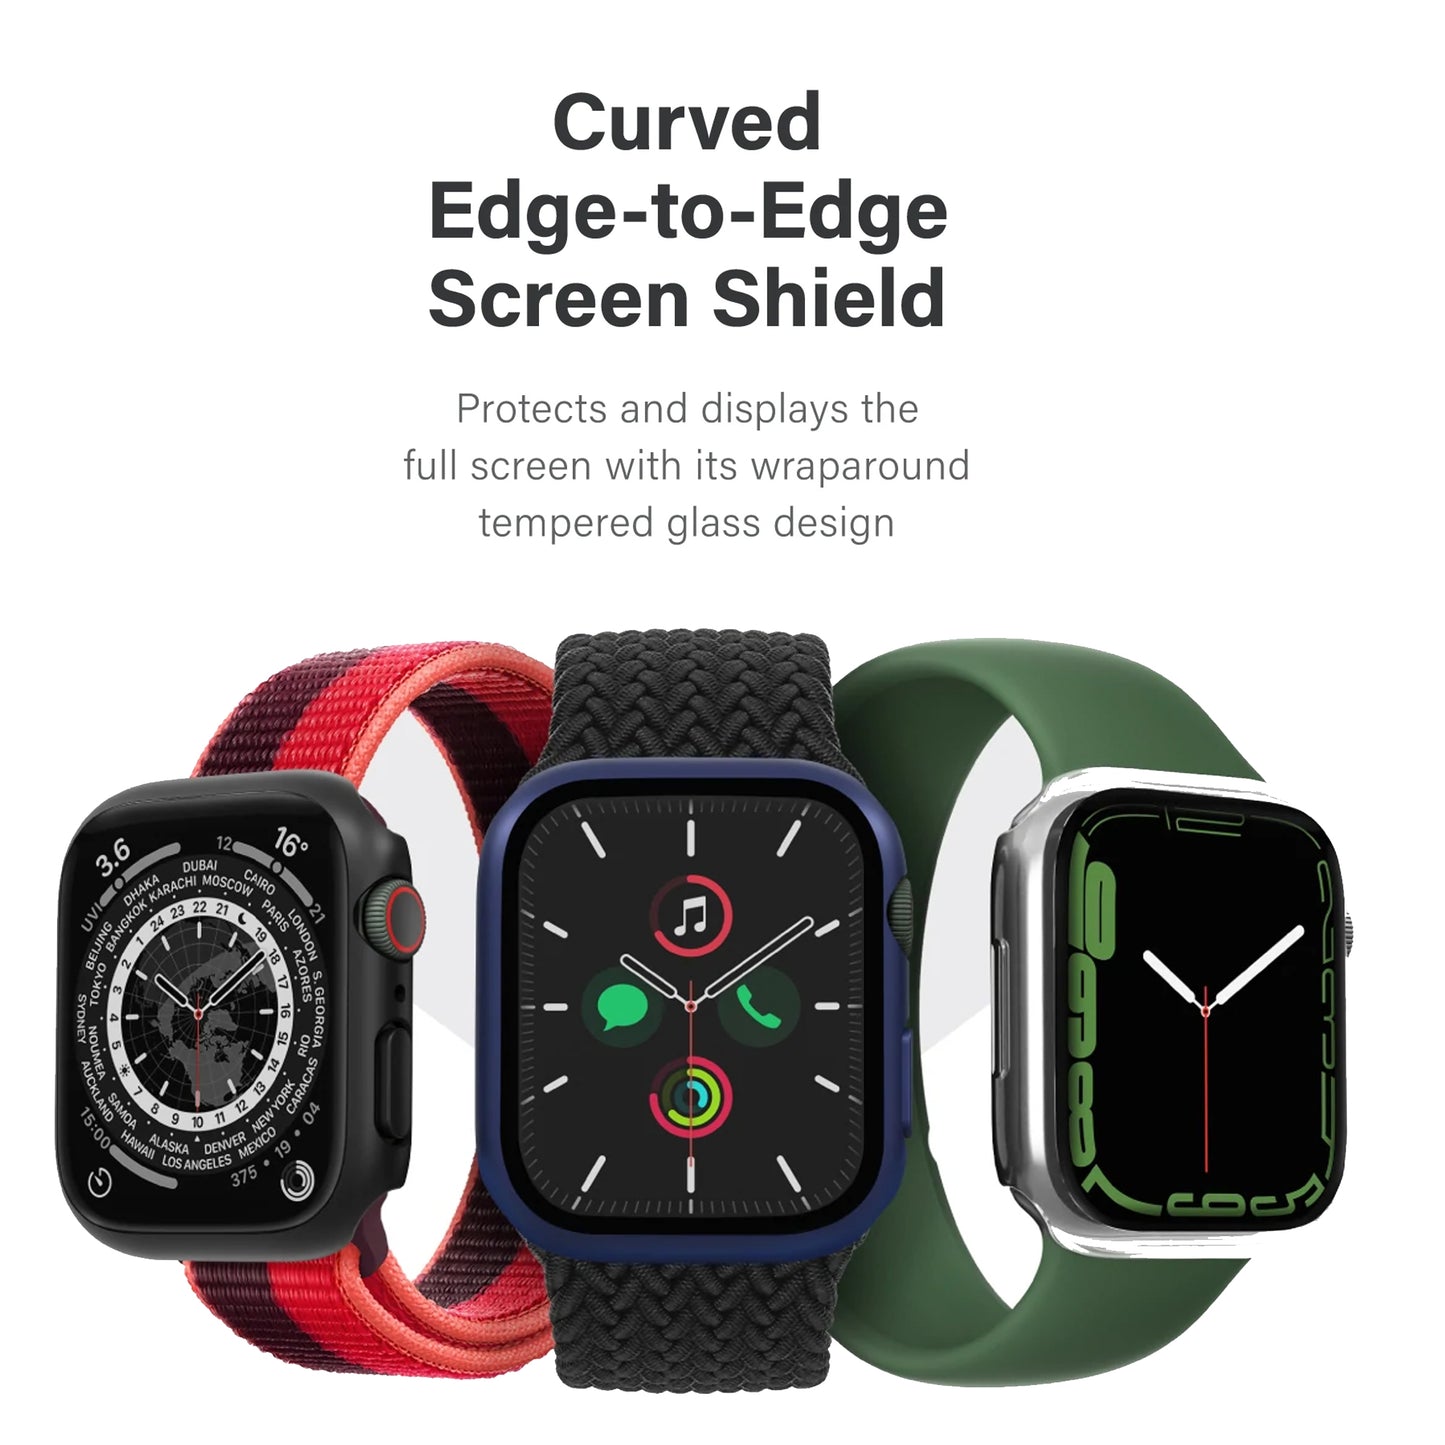 UNIQ Legion Case for Apple Watch Series 7 ( 45mm ) - Clear (Barcode: 8886463679517 )